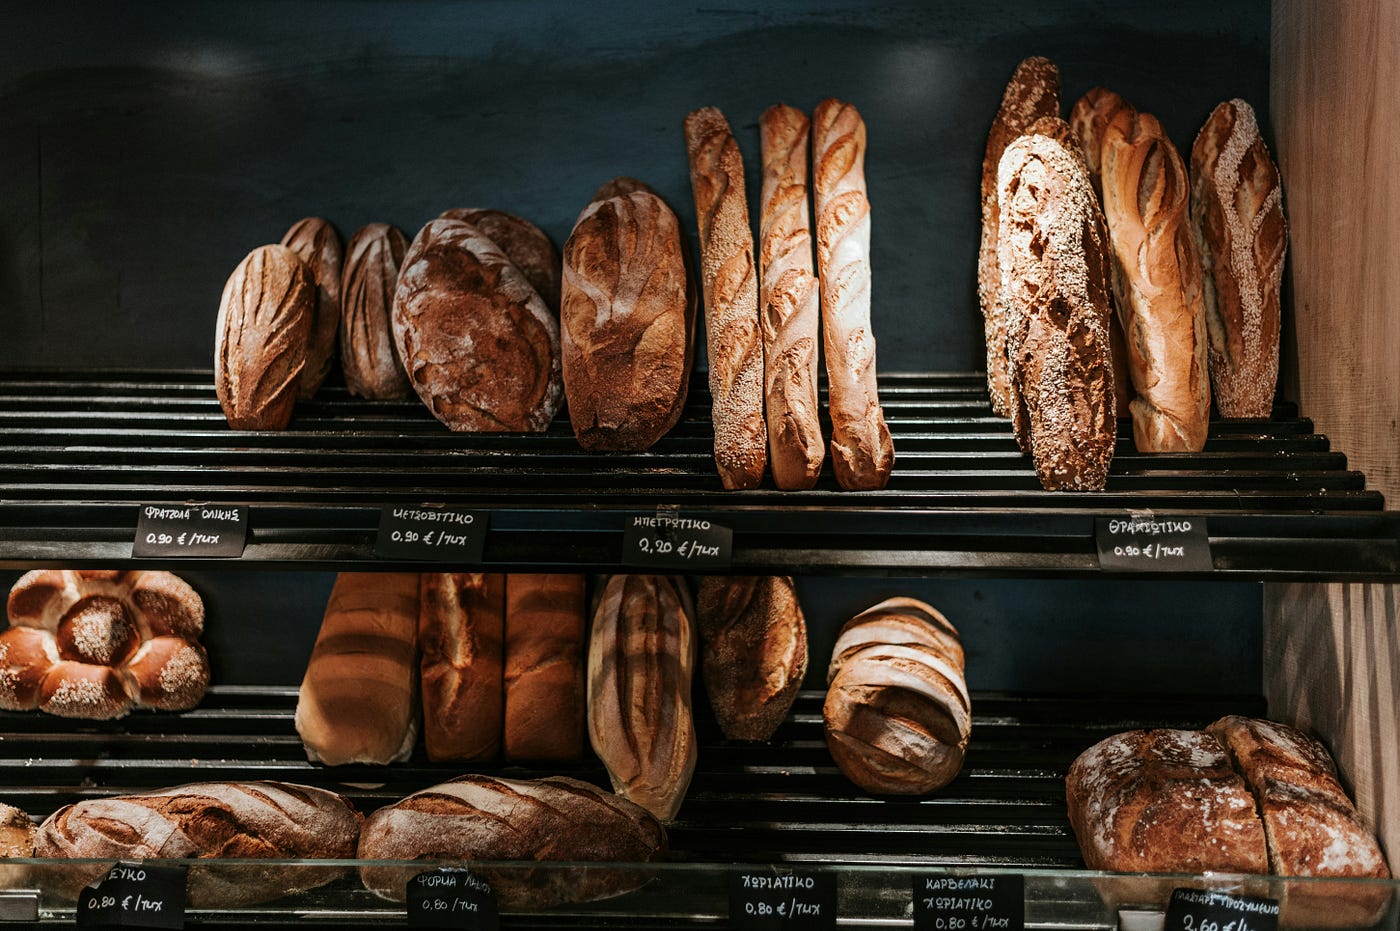 Recall of Bread Occurred Following Life-Threatening Warning